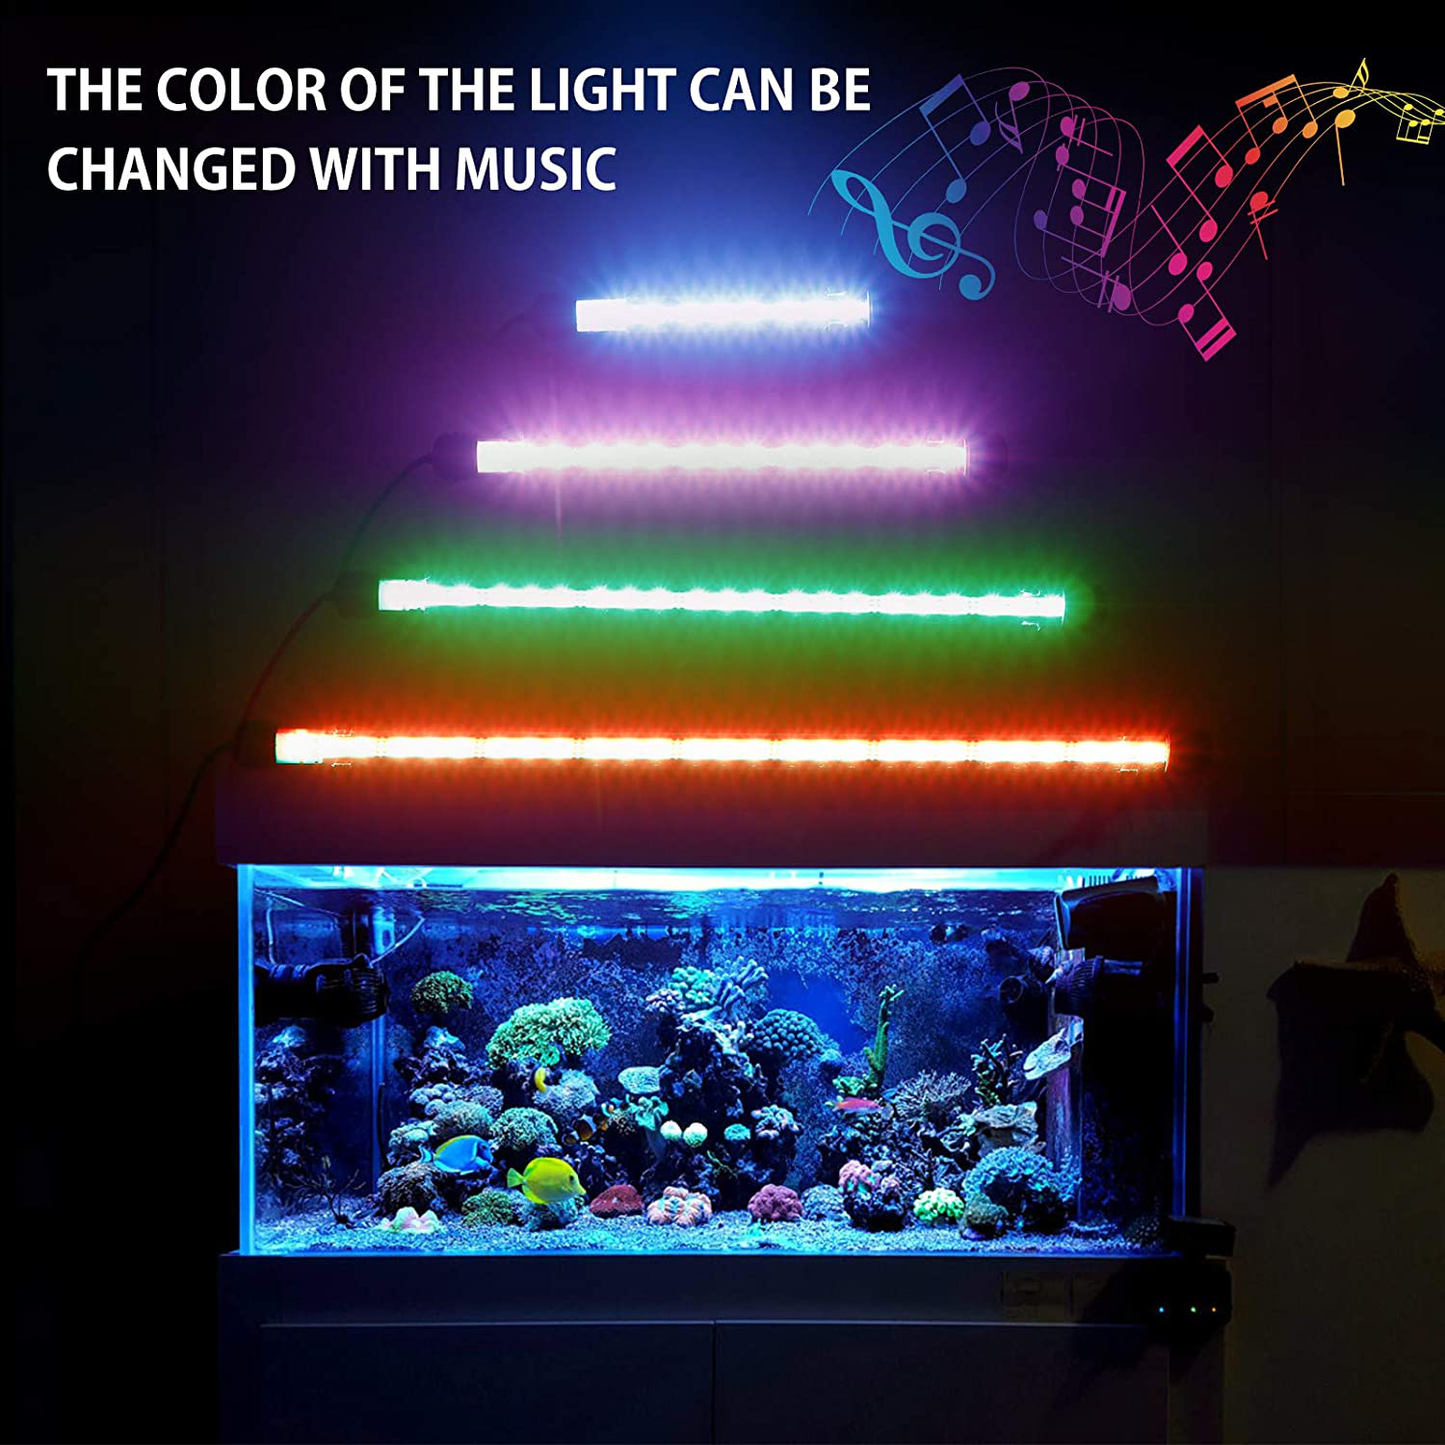 LED Aquarium Light, Underwater RGB LED Lights for Fish Tank, 16 Million Vibrant Colors Choosable Lighting Colors, LED Fish Tank Light with Remote Controller+ APP Control, Upgraded Version